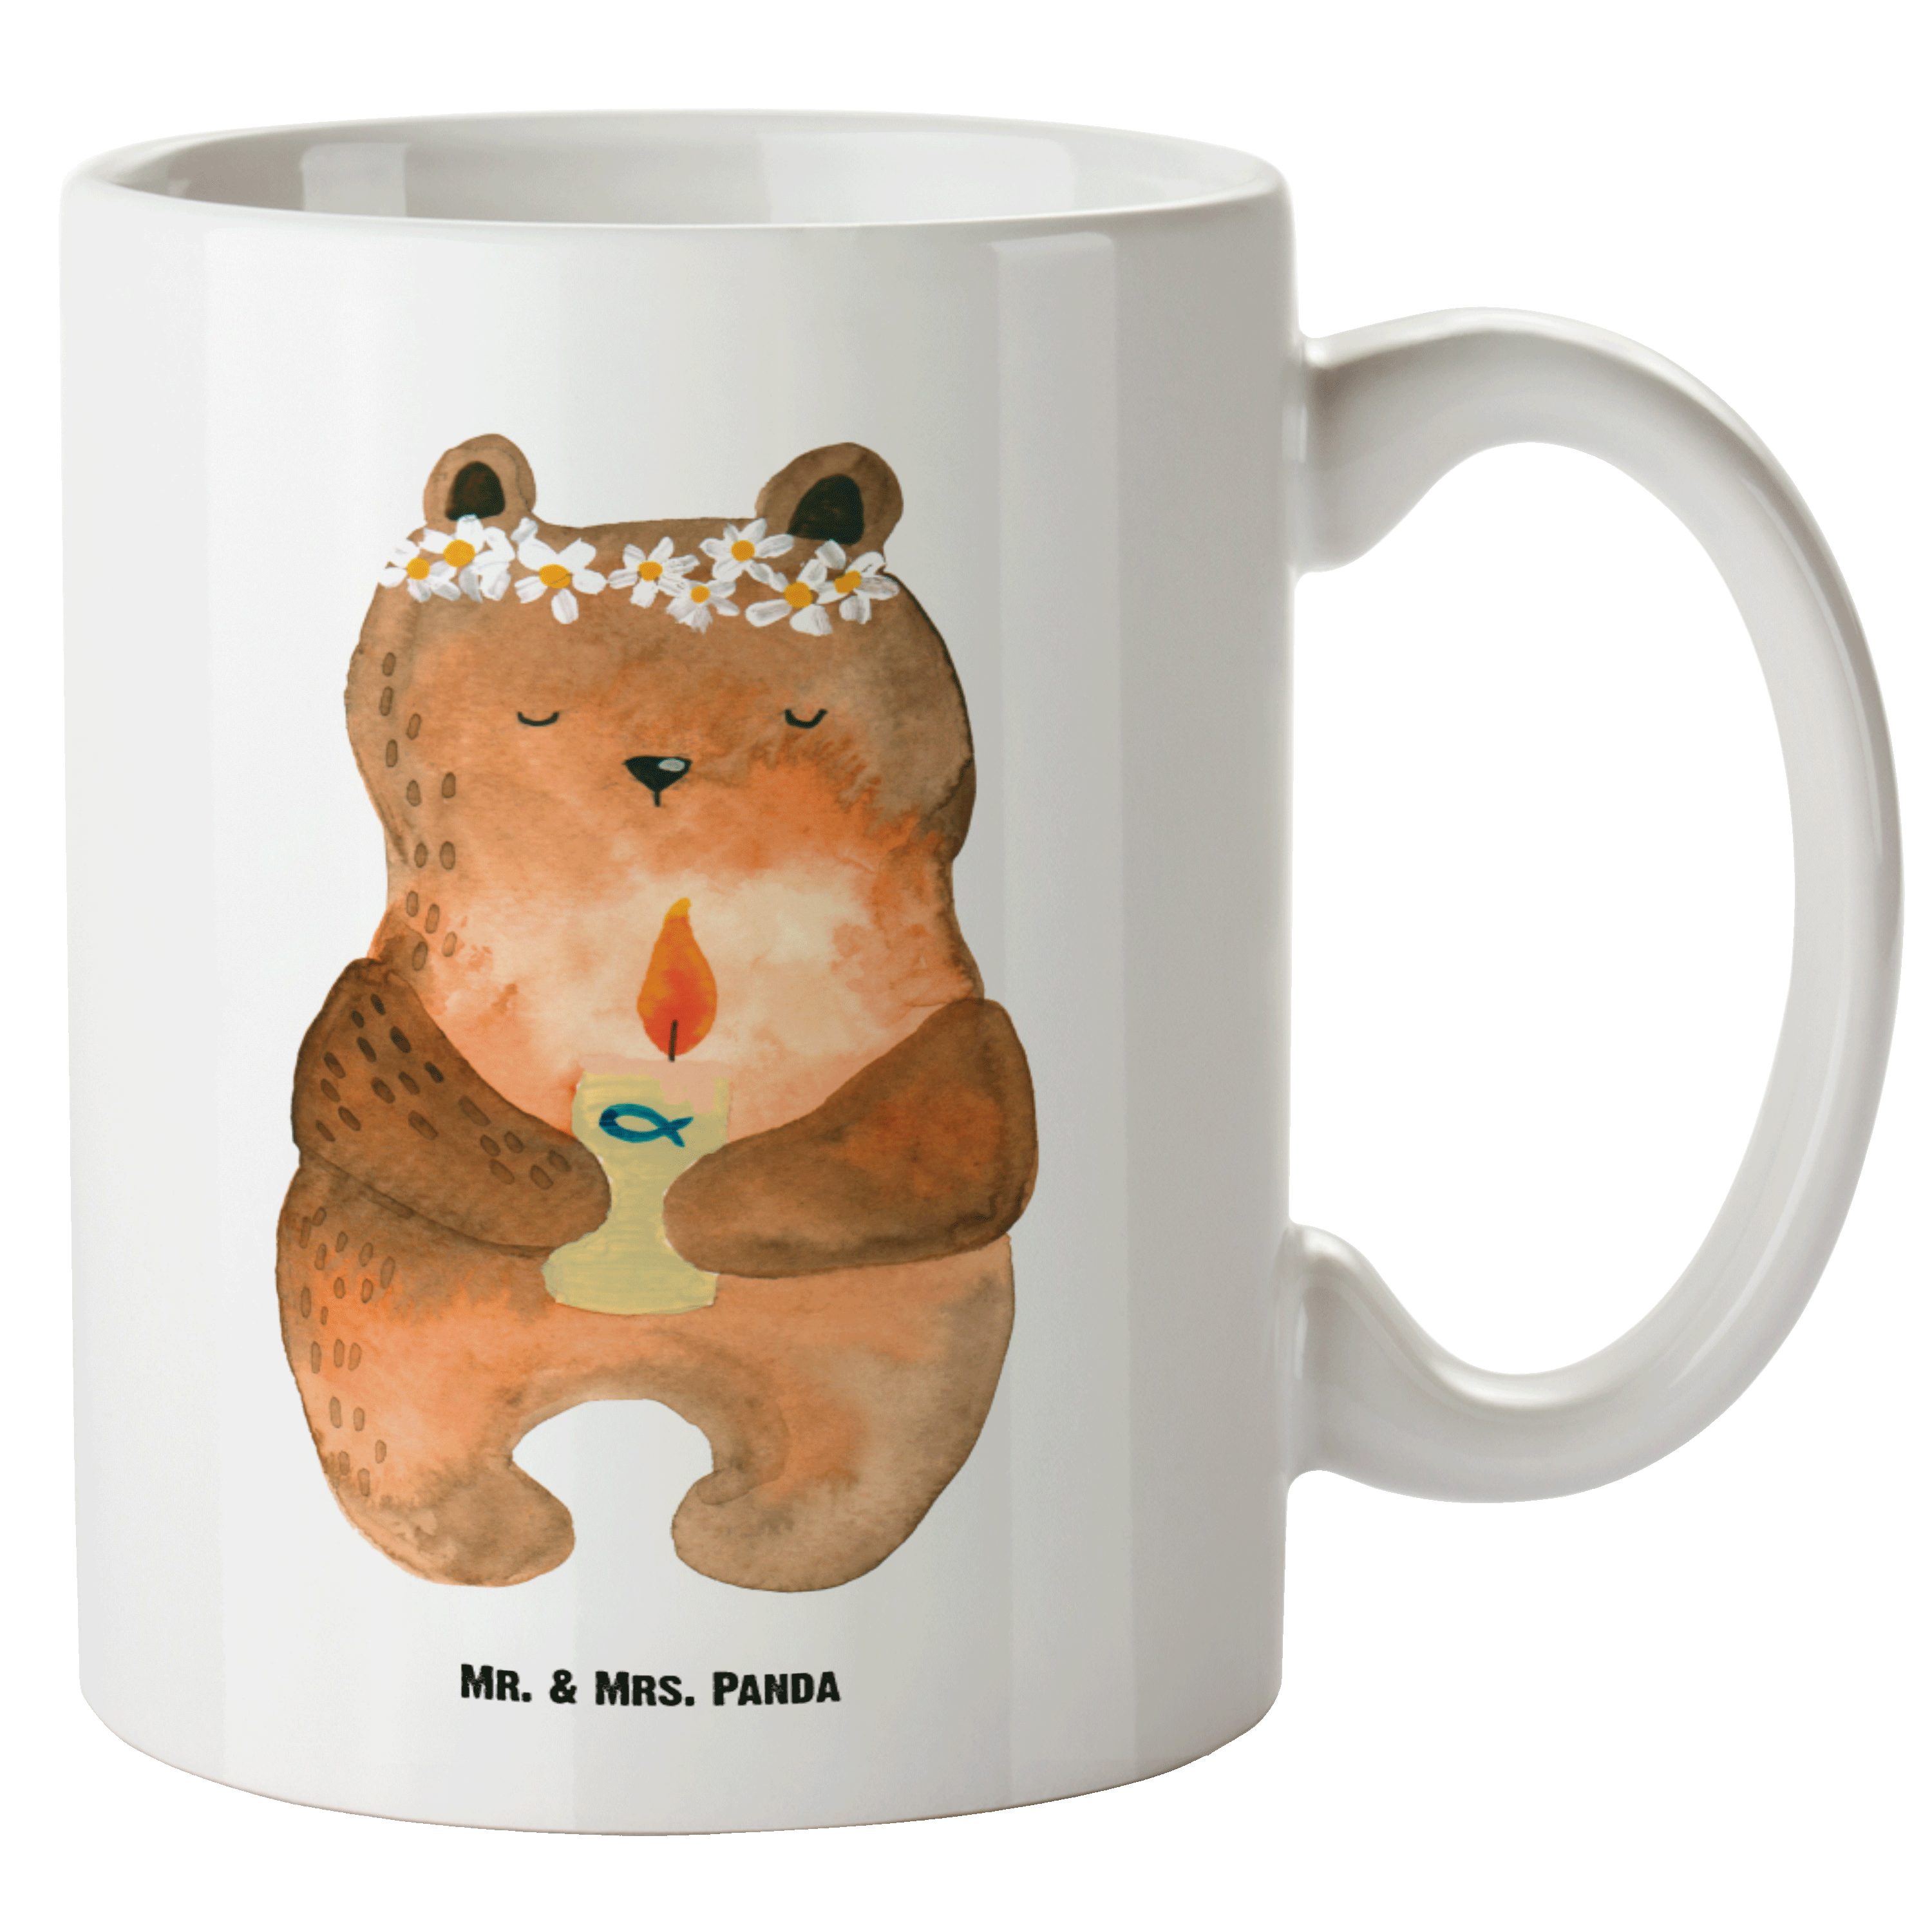 Mr. & Mrs. Panda Tasse Kommunion-Bär - Weiß - Geschenk, Grosse Kaffeetasse, Groß, Gottes Seg, XL Tasse Keramik